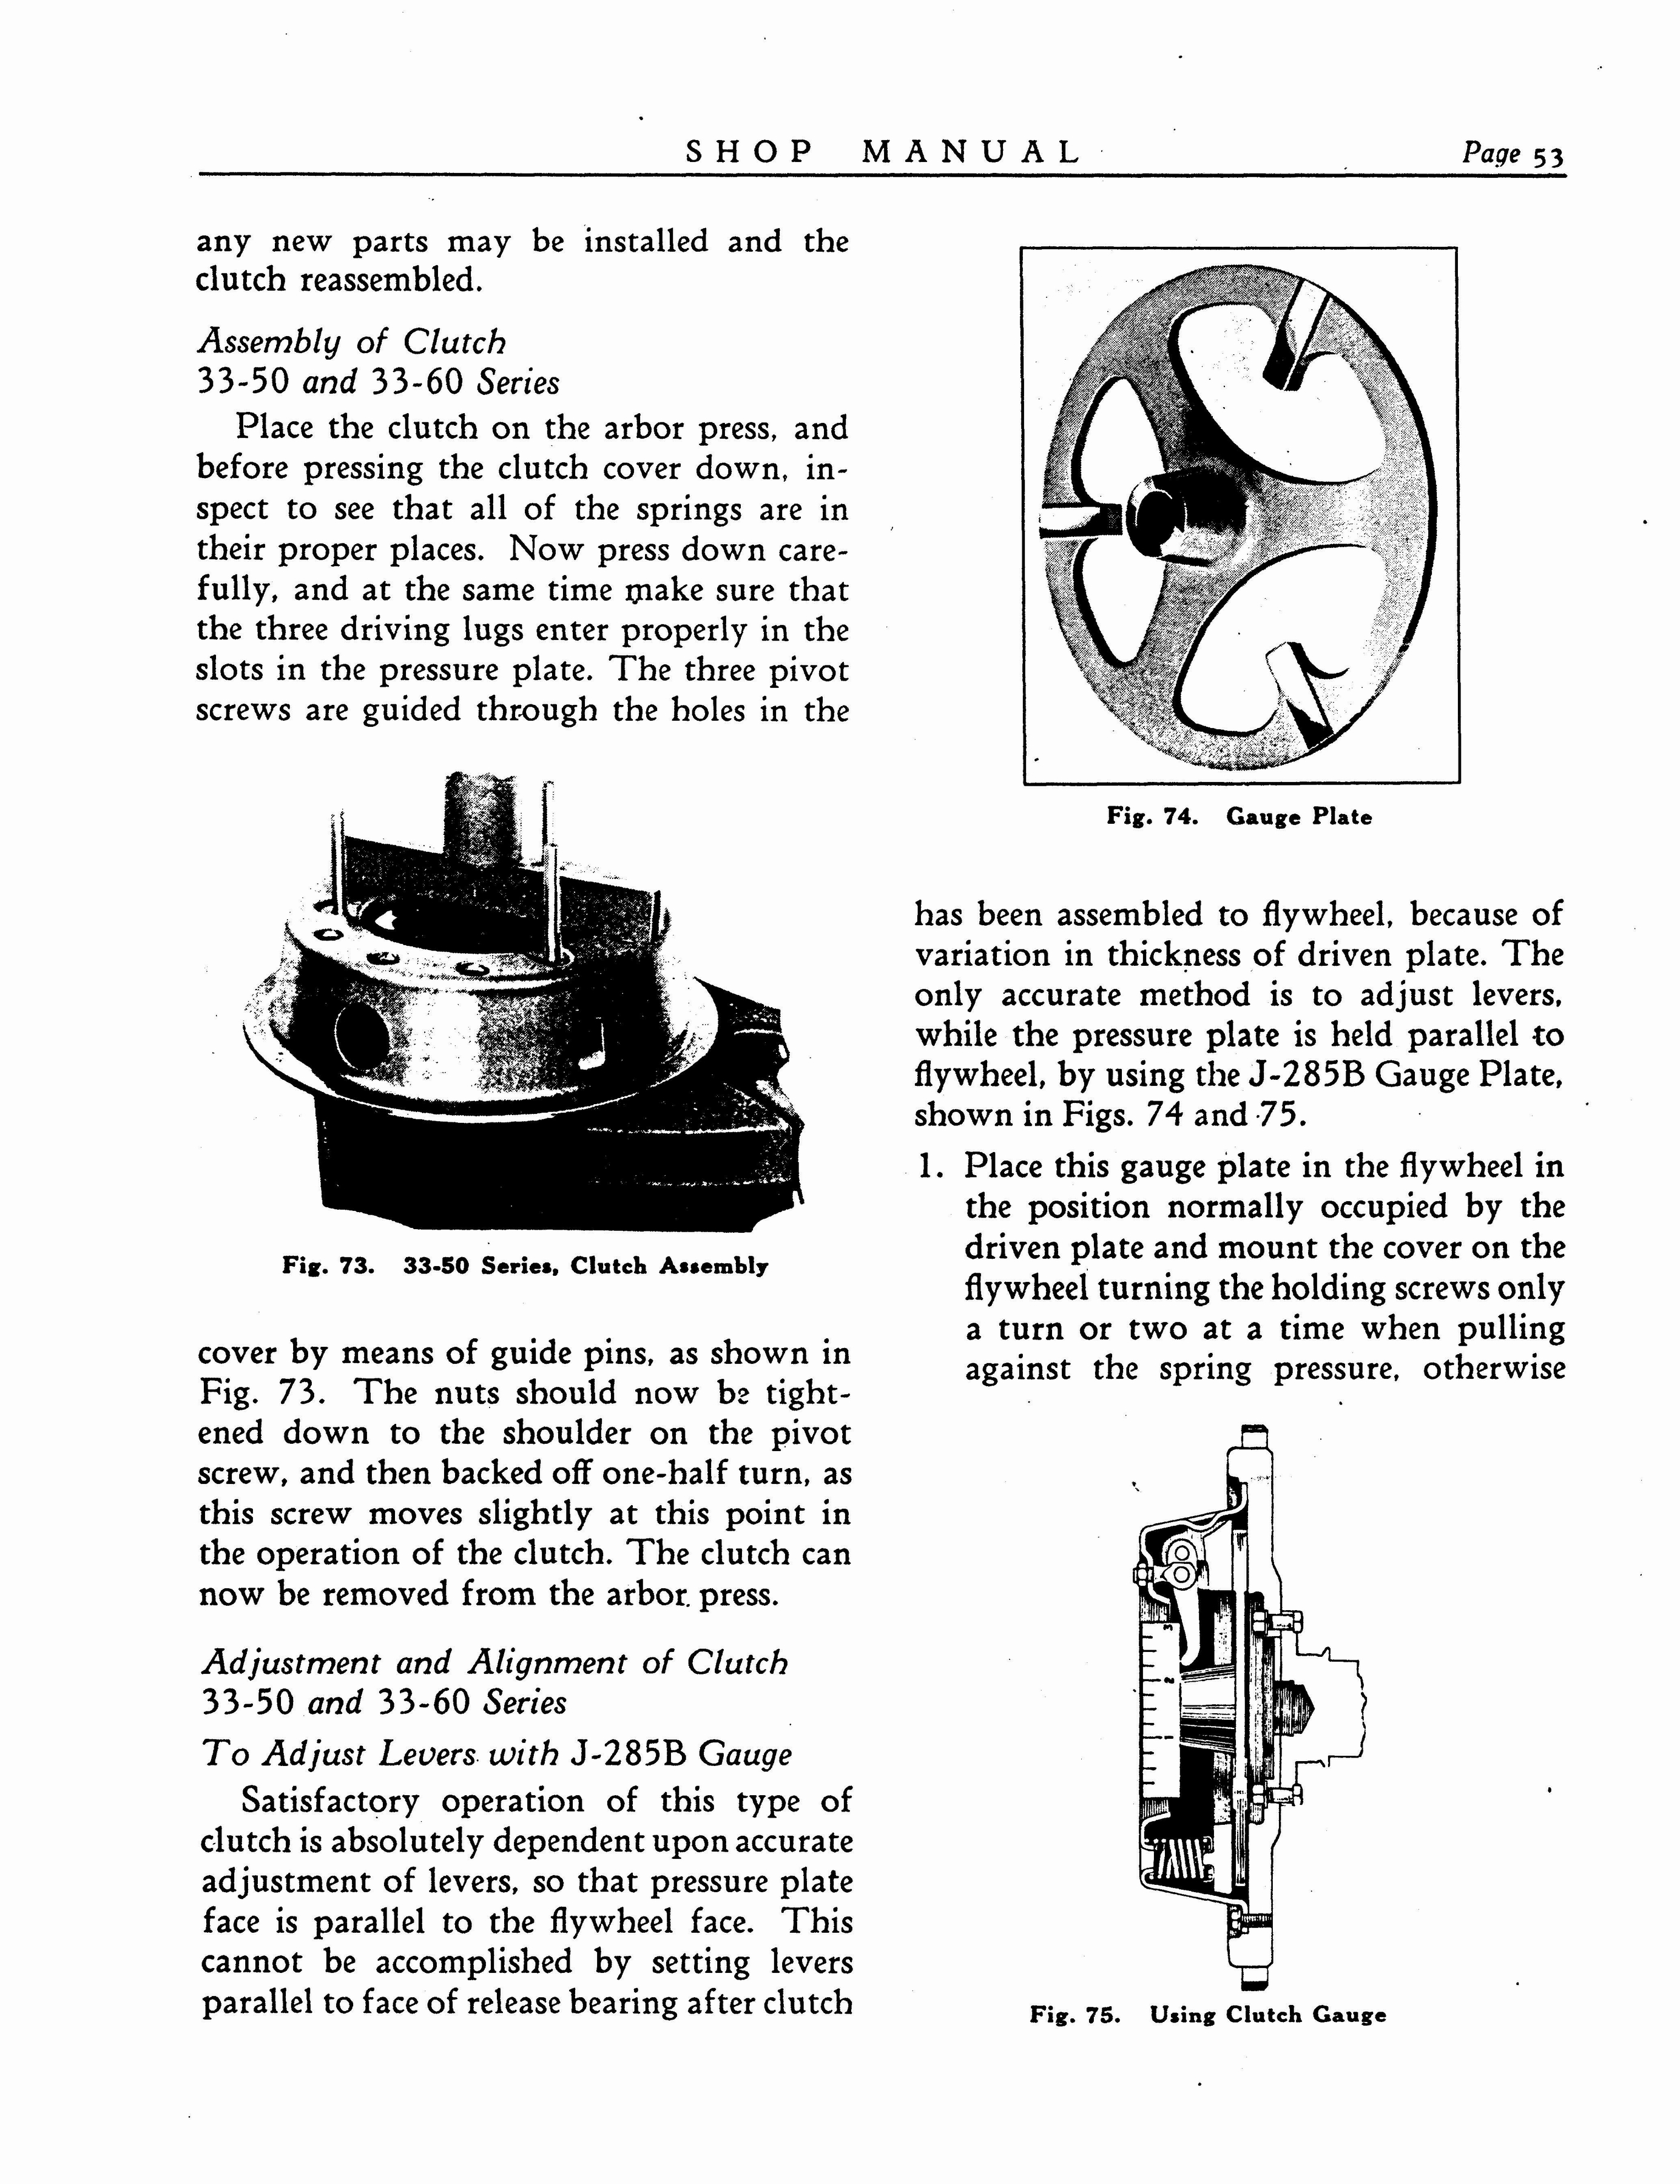 n_1933 Buick Shop Manual_Page_054.jpg